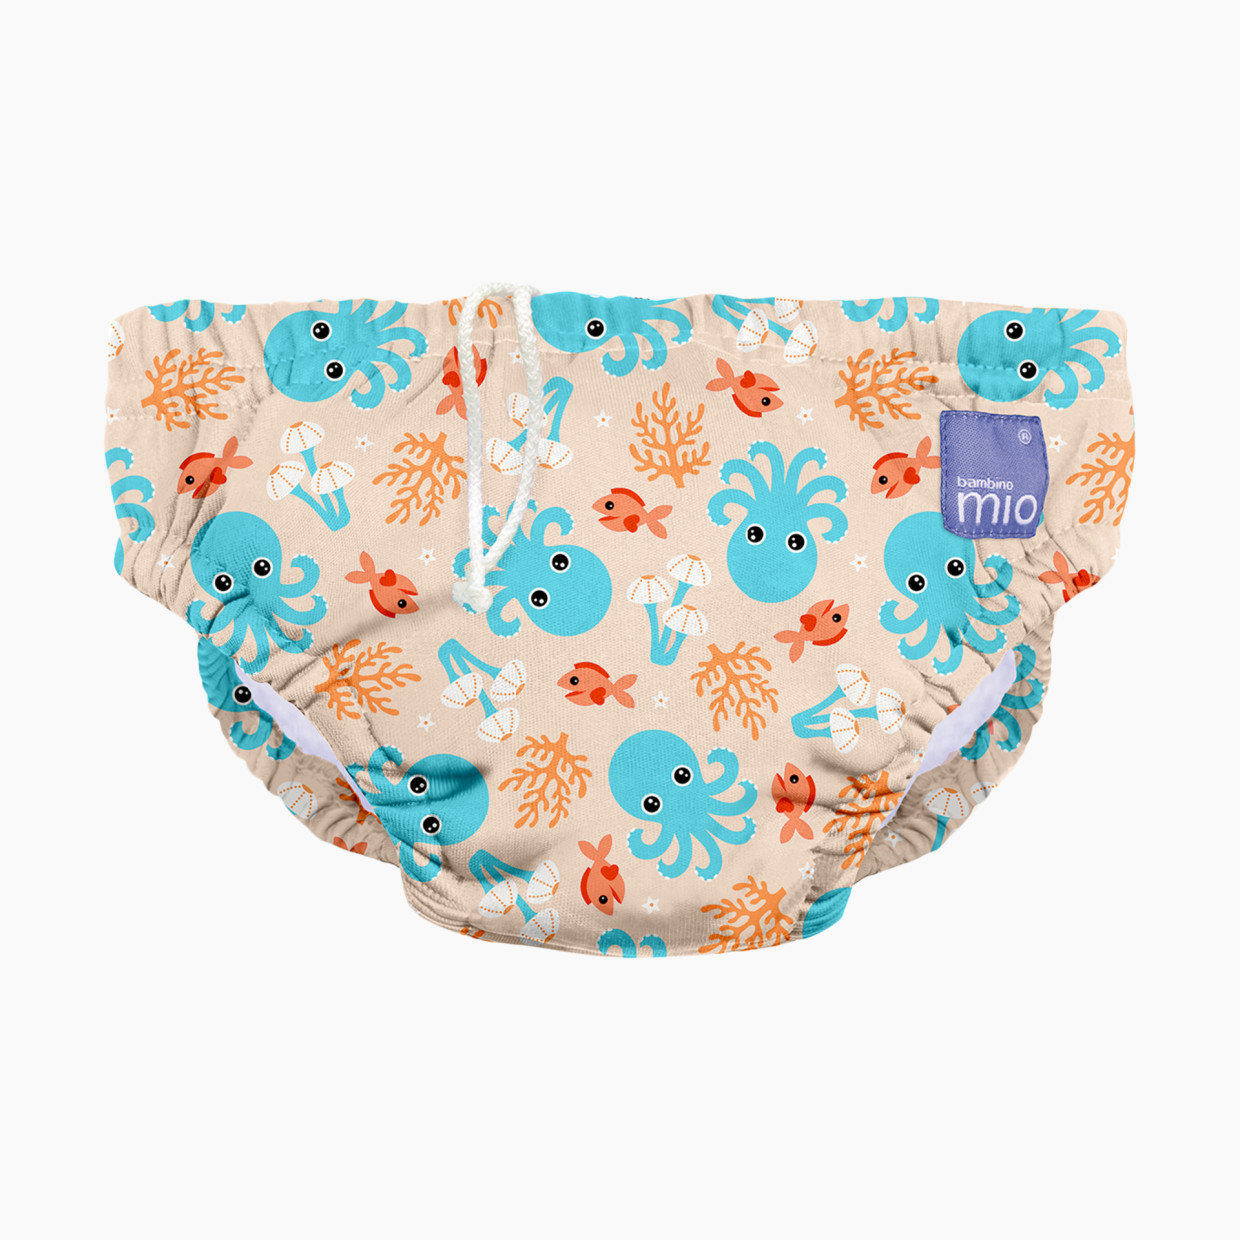 Bambino Mio Reusable Swim Diaper - Blue Squid, Small (0-6 Months).